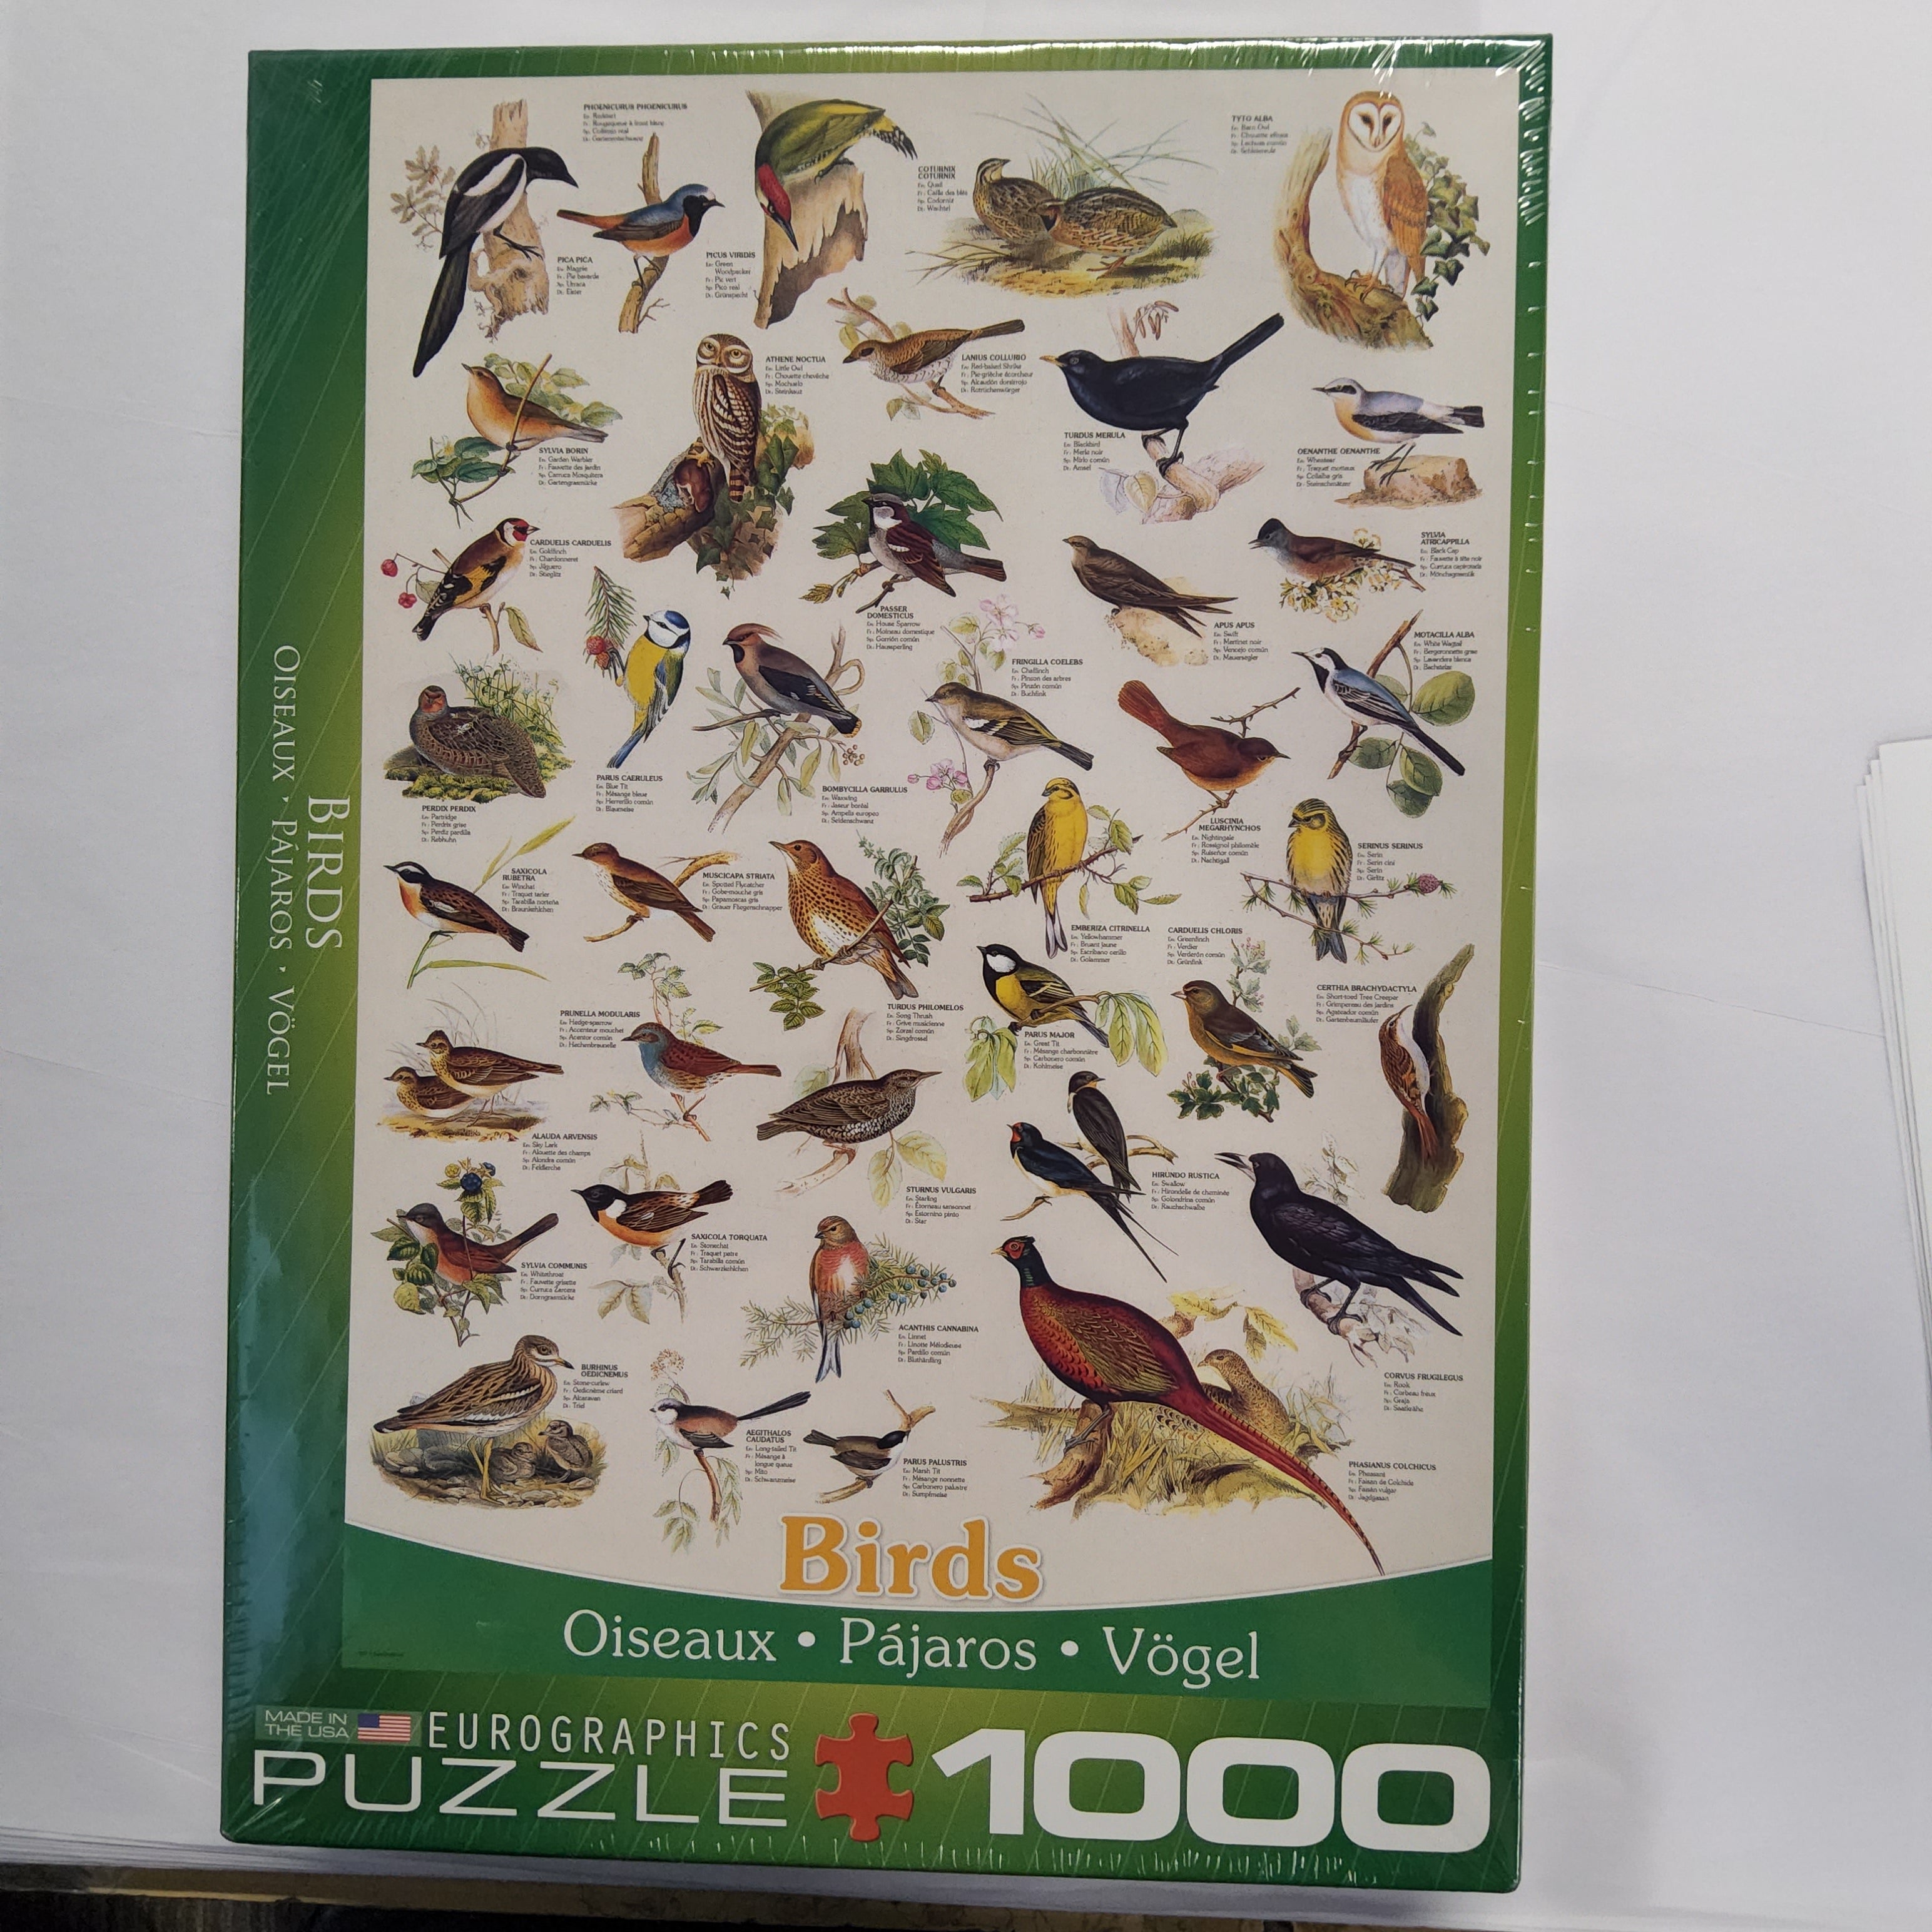 Eurographics Puzzle - Birds - 1000 pieces - 6000-1259